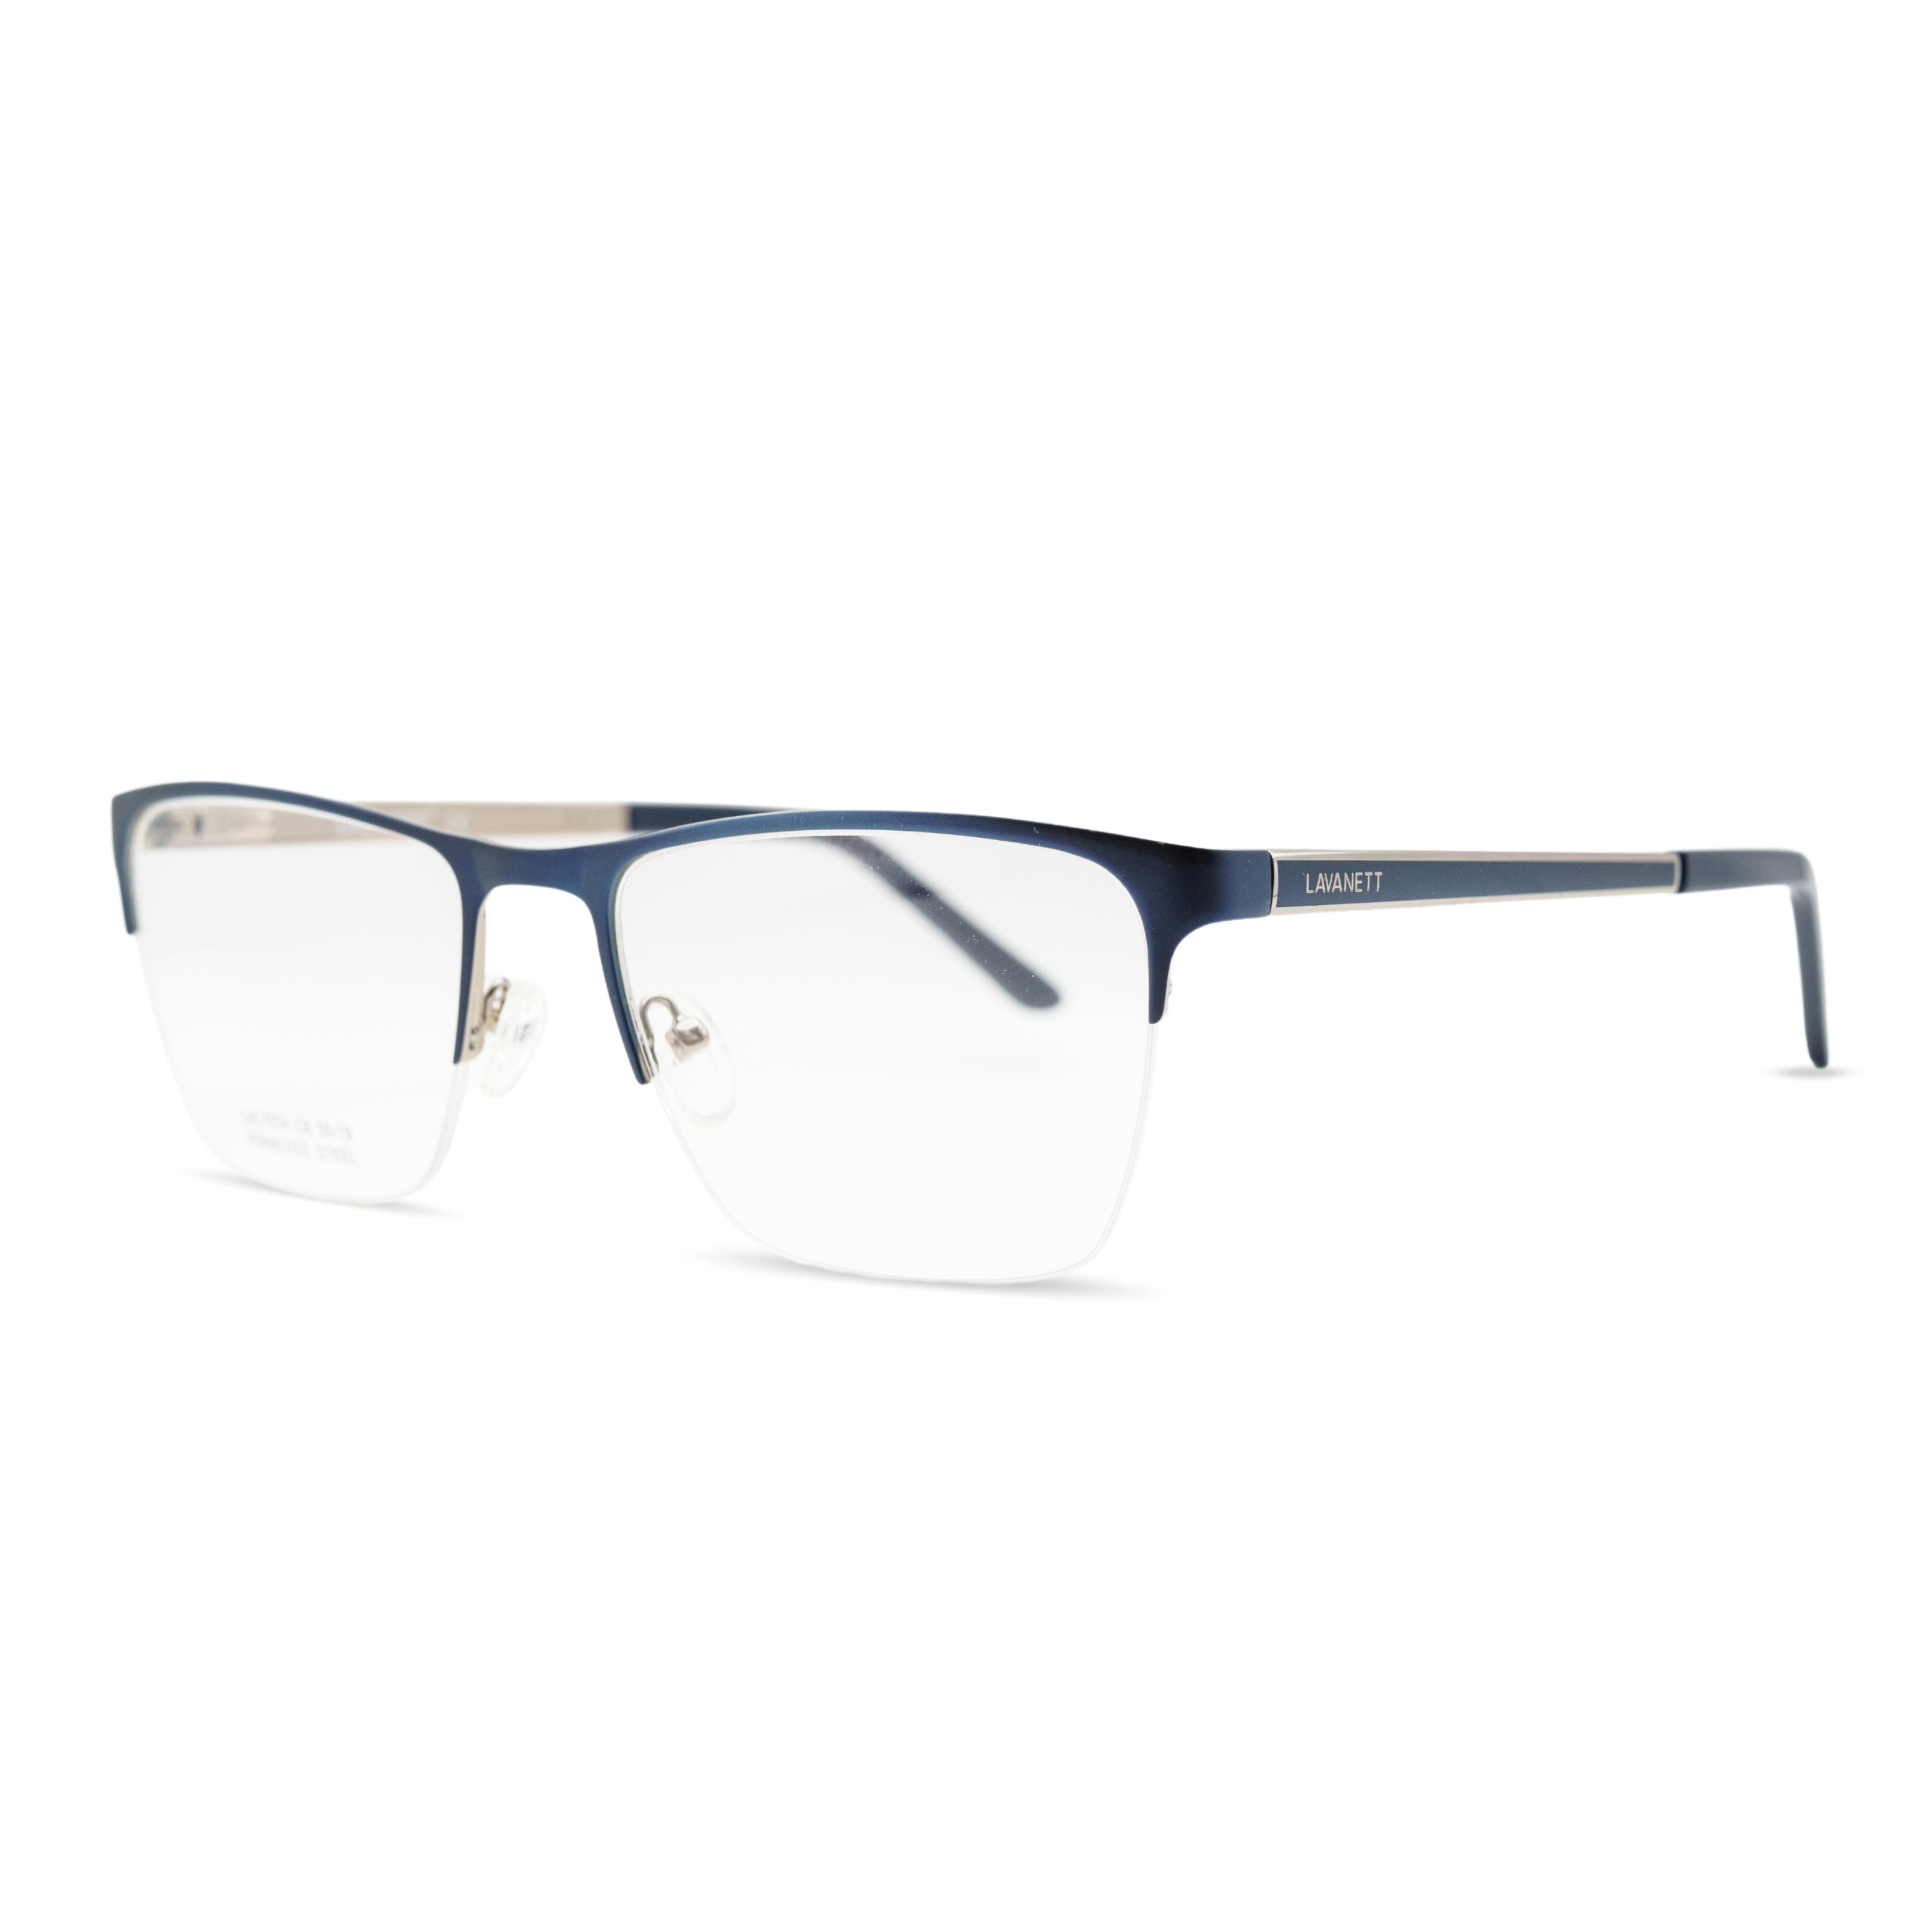 LT4004 | Lavanett | Mood Eyewear | Lentes Ópticos & Gafas de Sol | Óptica  Online